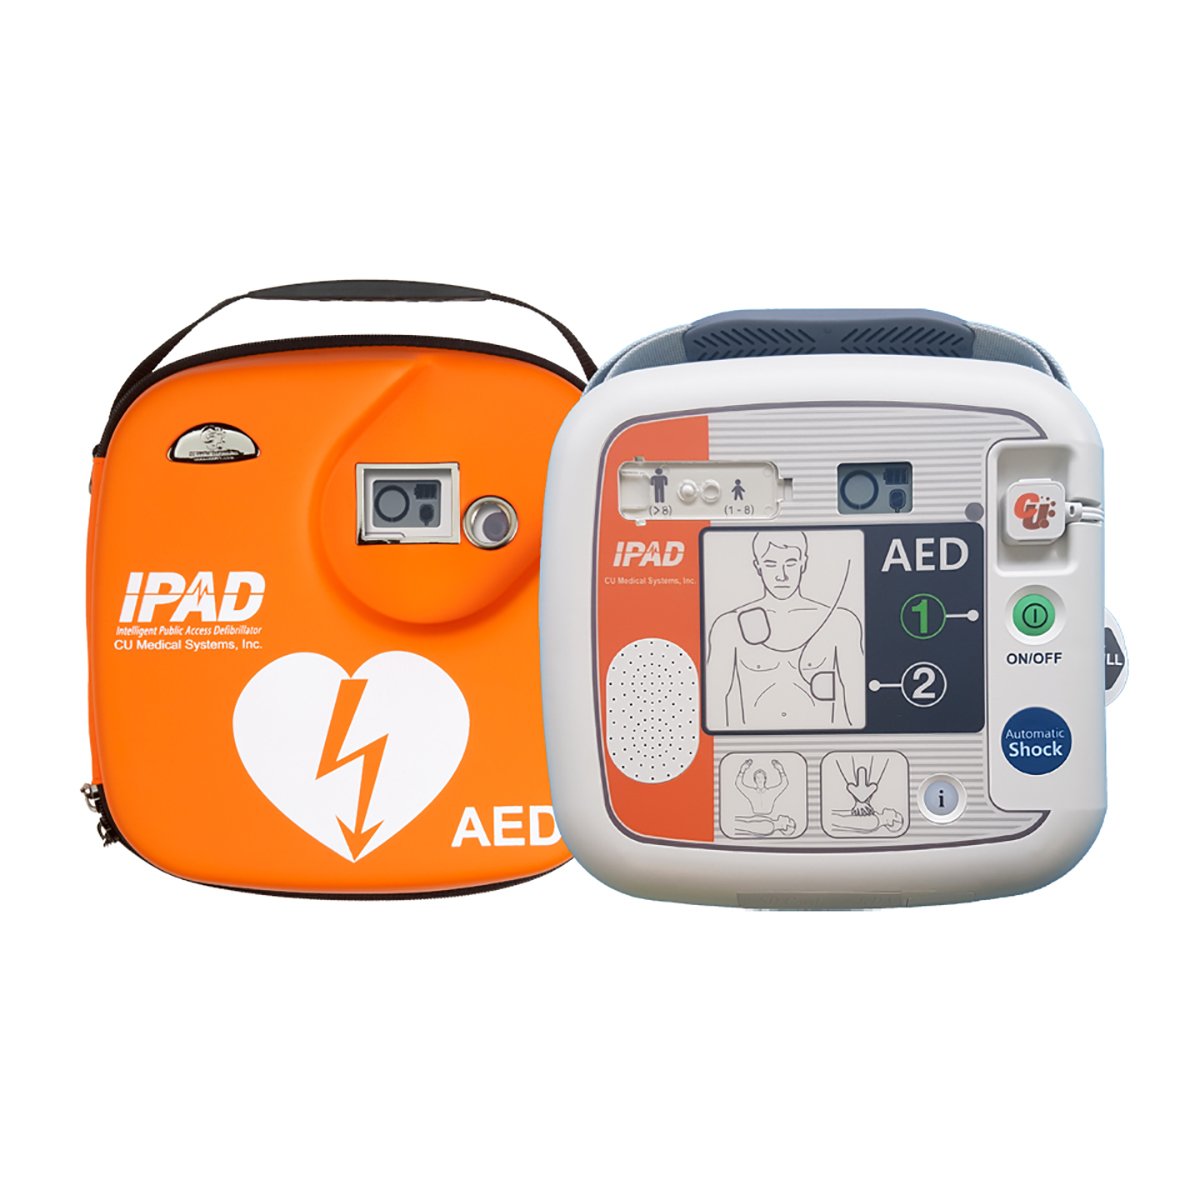 iPAD SP1 (AED) Fully Automatic Defibrillator